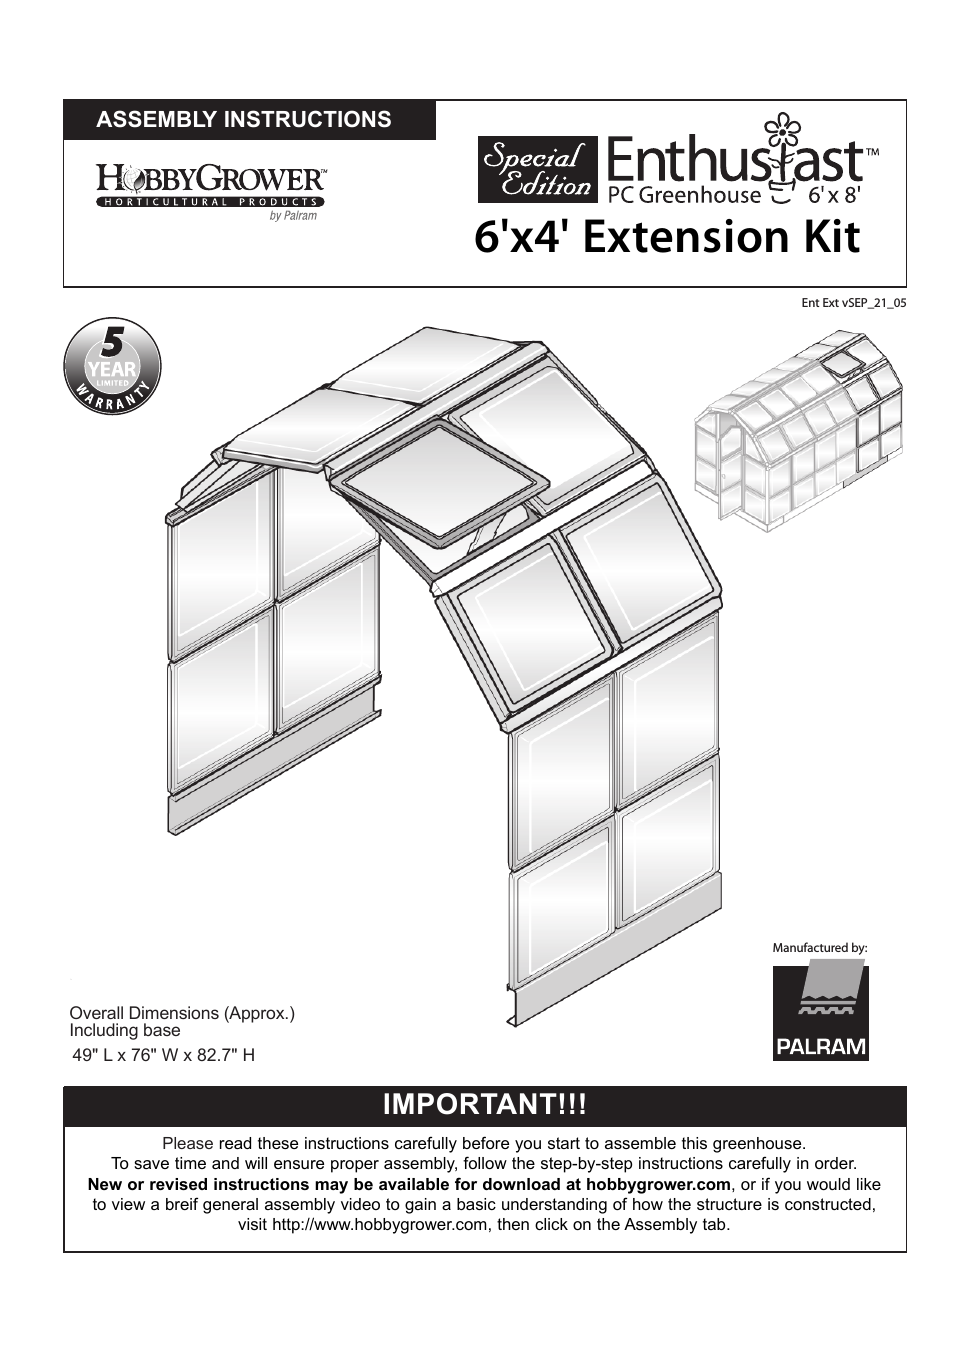 Enthusiast 6x4 Extension Kit